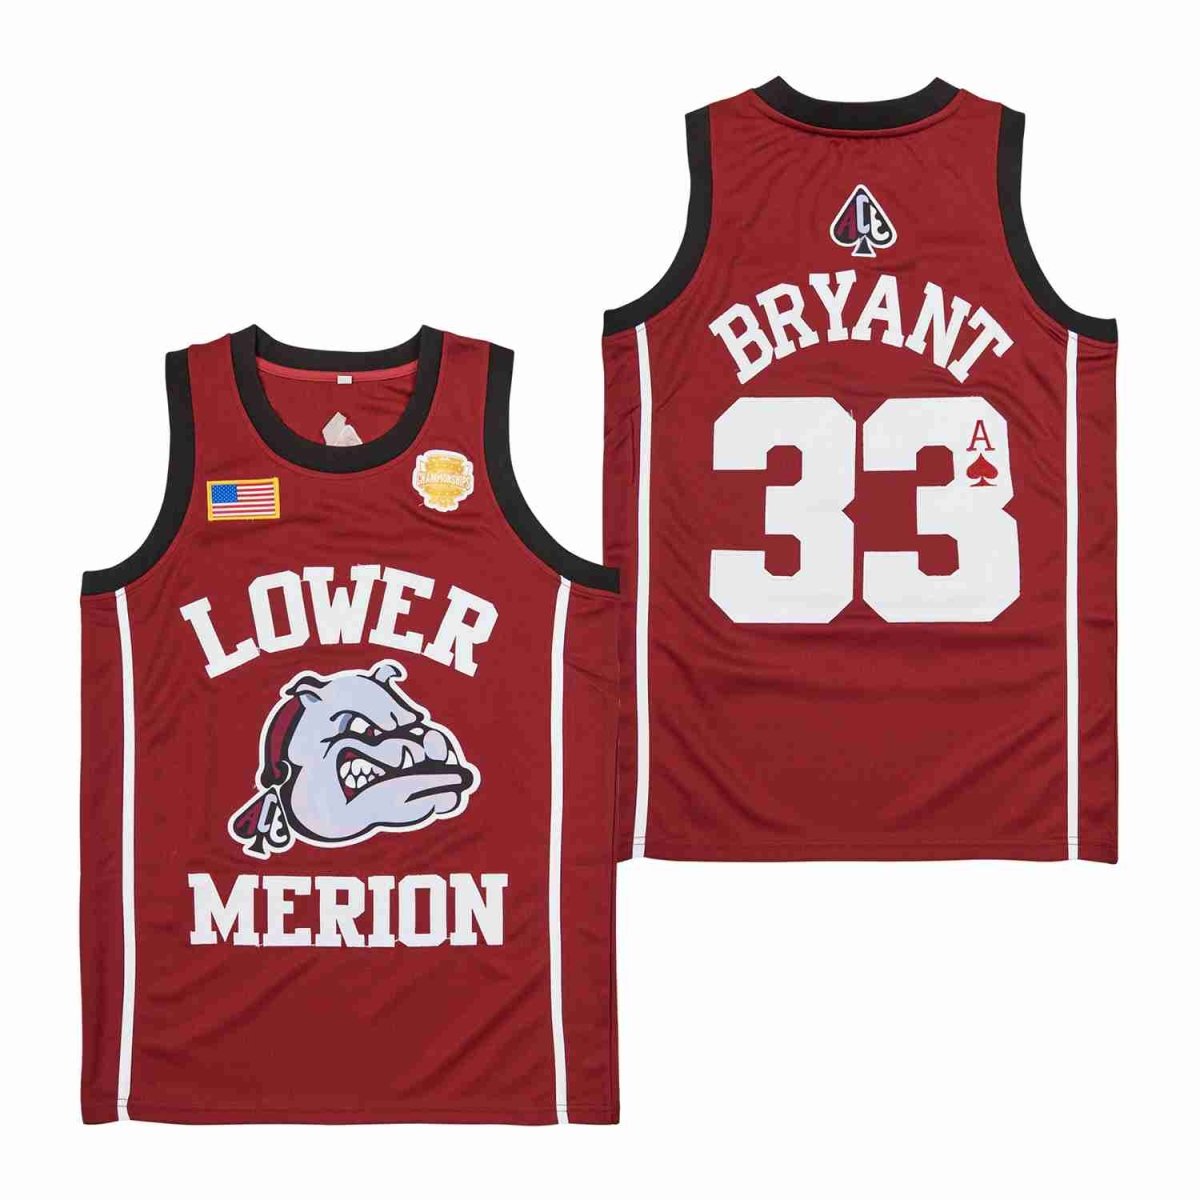 Kobe Bryant #33 Lower Merion Tie-Dye Edition Jersey 3XL